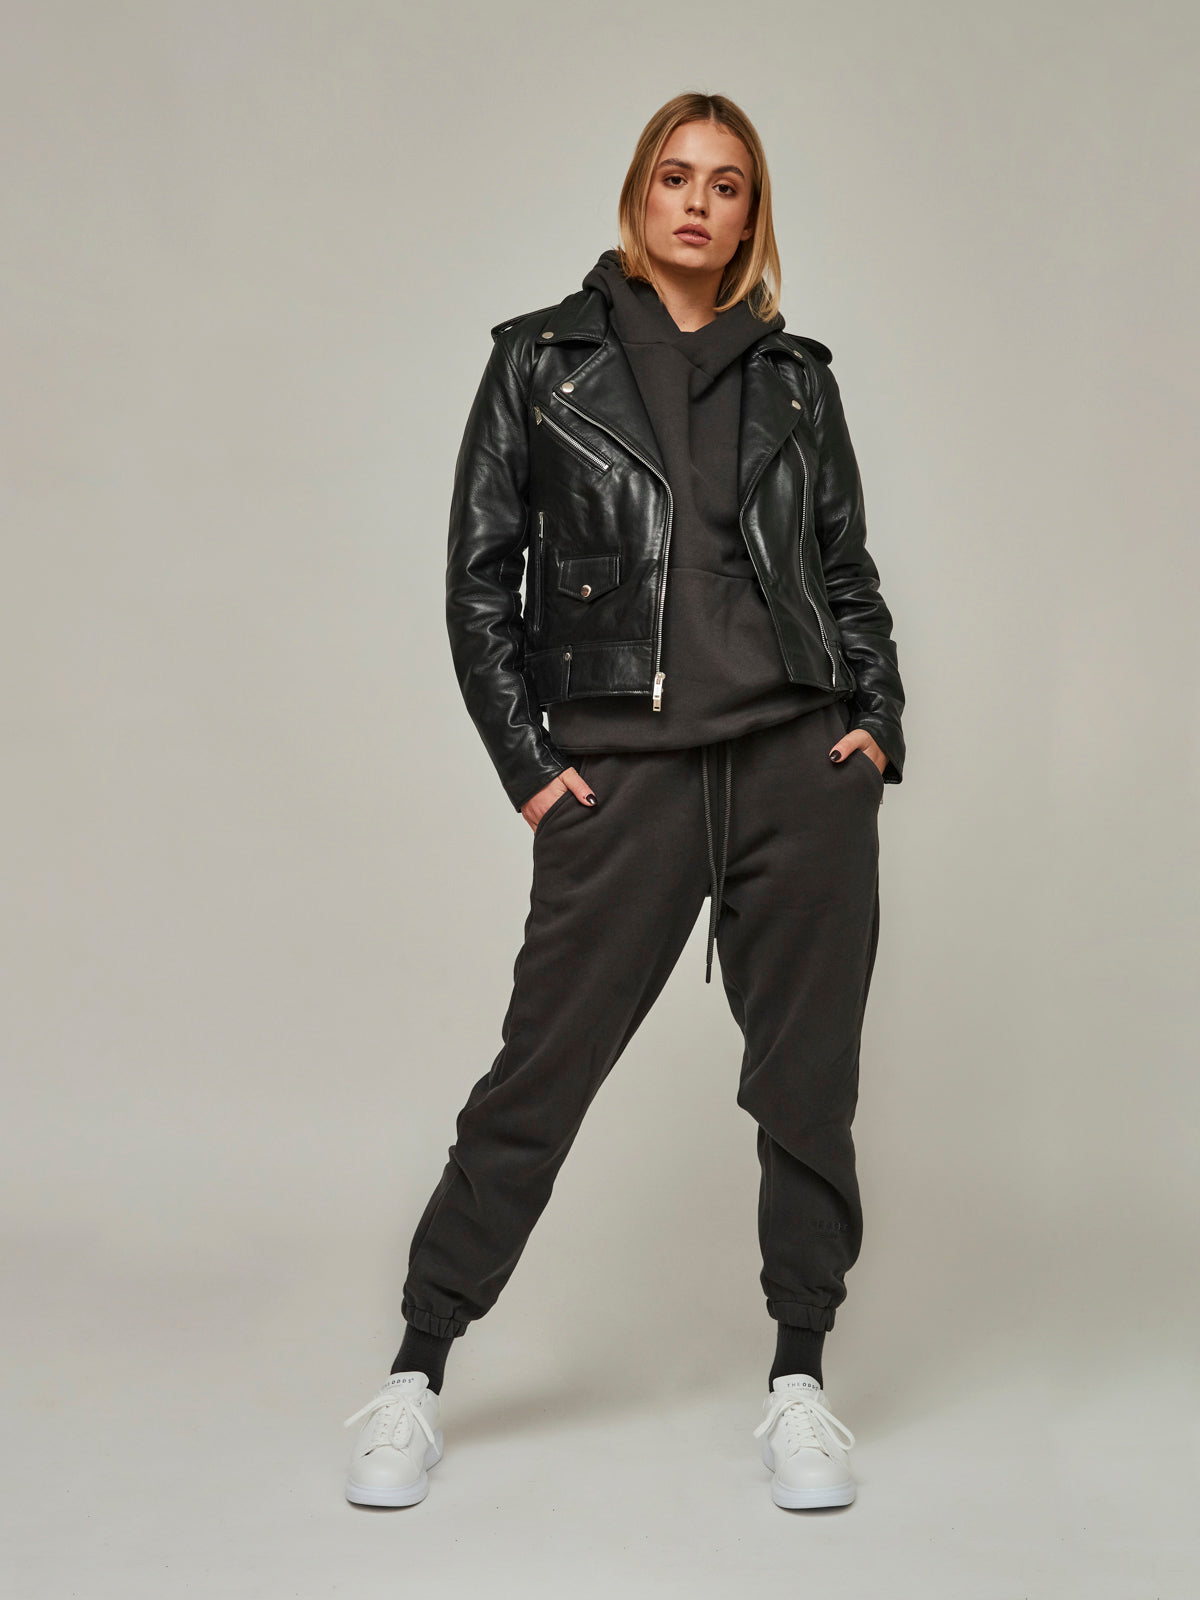 Carbon Matte Leather Jacket Women/ LMTD Edition